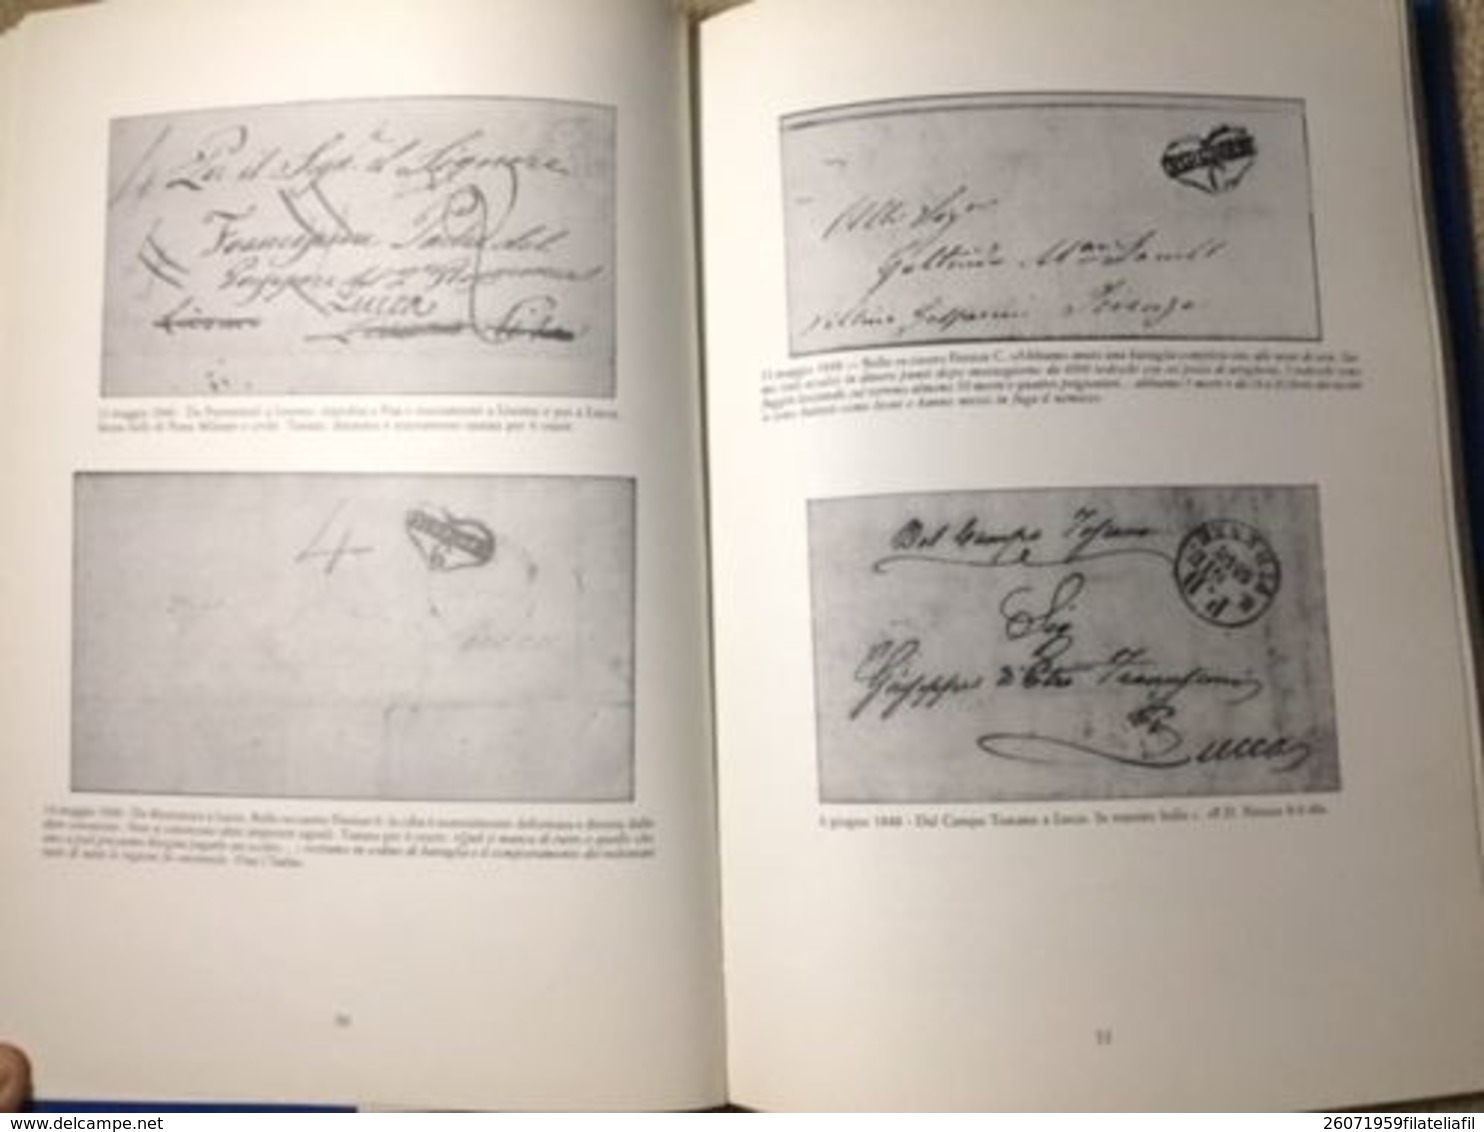 BIBLIOTECA FILATELICA: 1848-1862 LA POSTA MILITARE TOSCANA DI AMEDEO PALMIERI - Military Mail And Military History